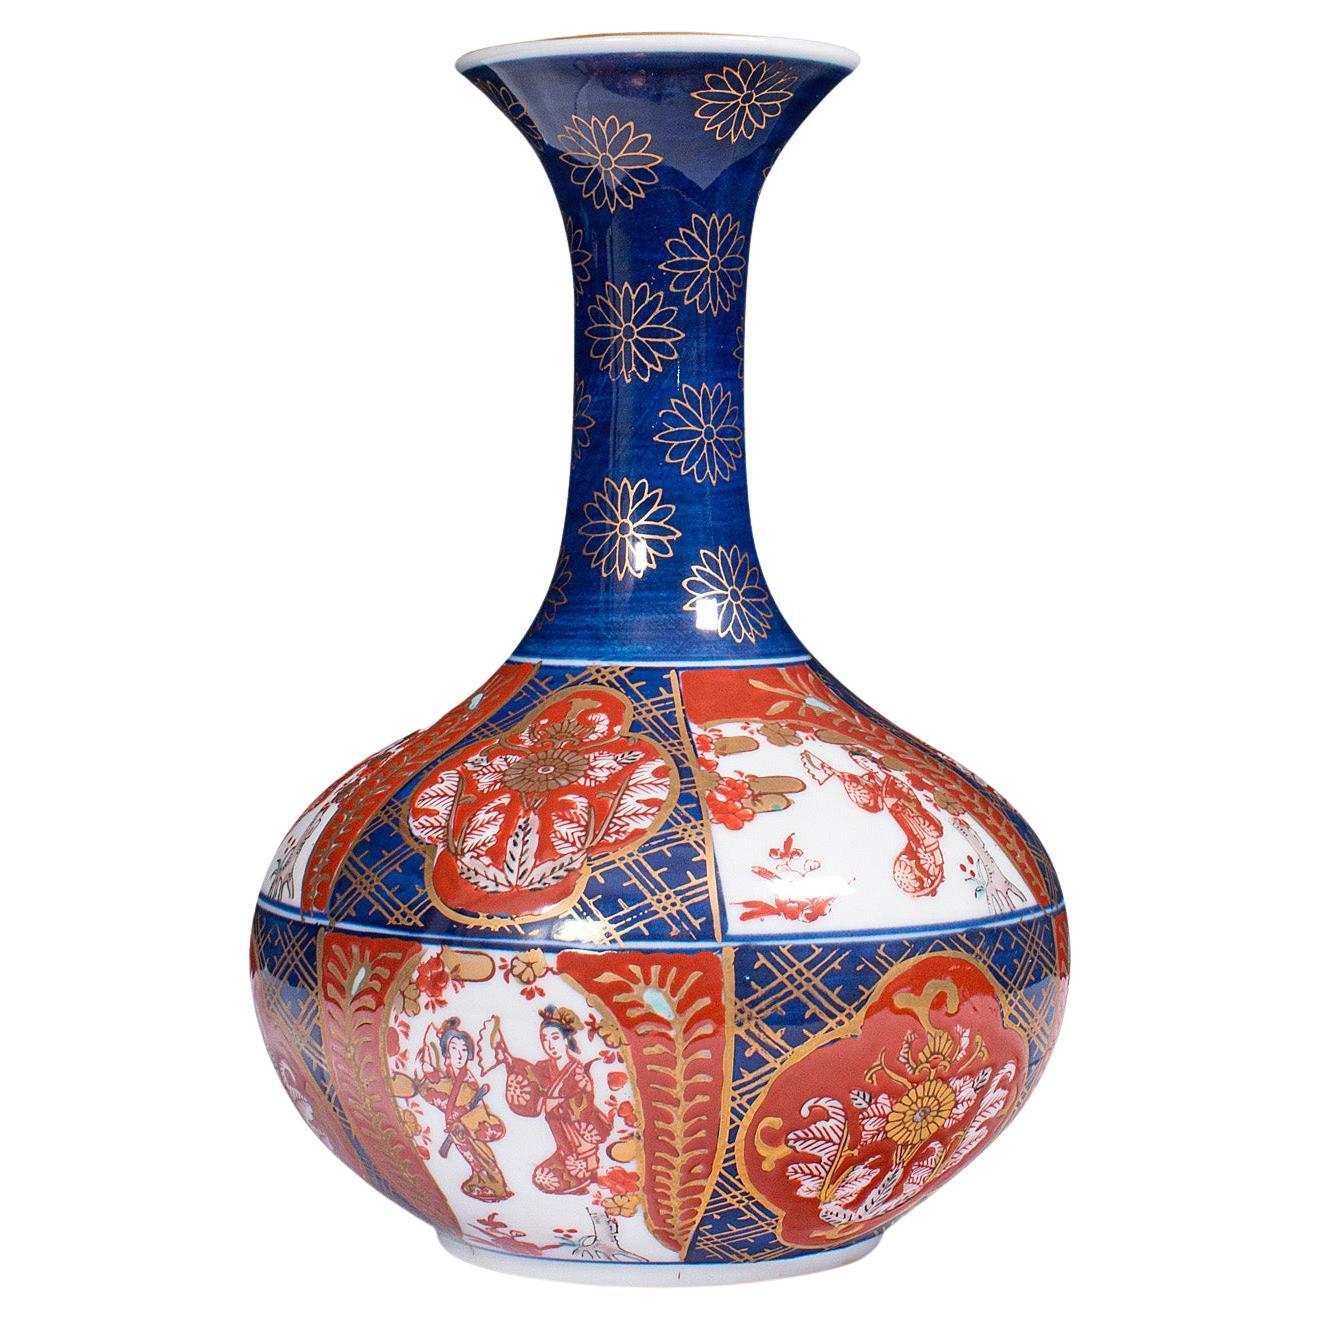 Vintage Imari Revival Flower Vase, Chinese, Ceramic, Decorative, Display Urn